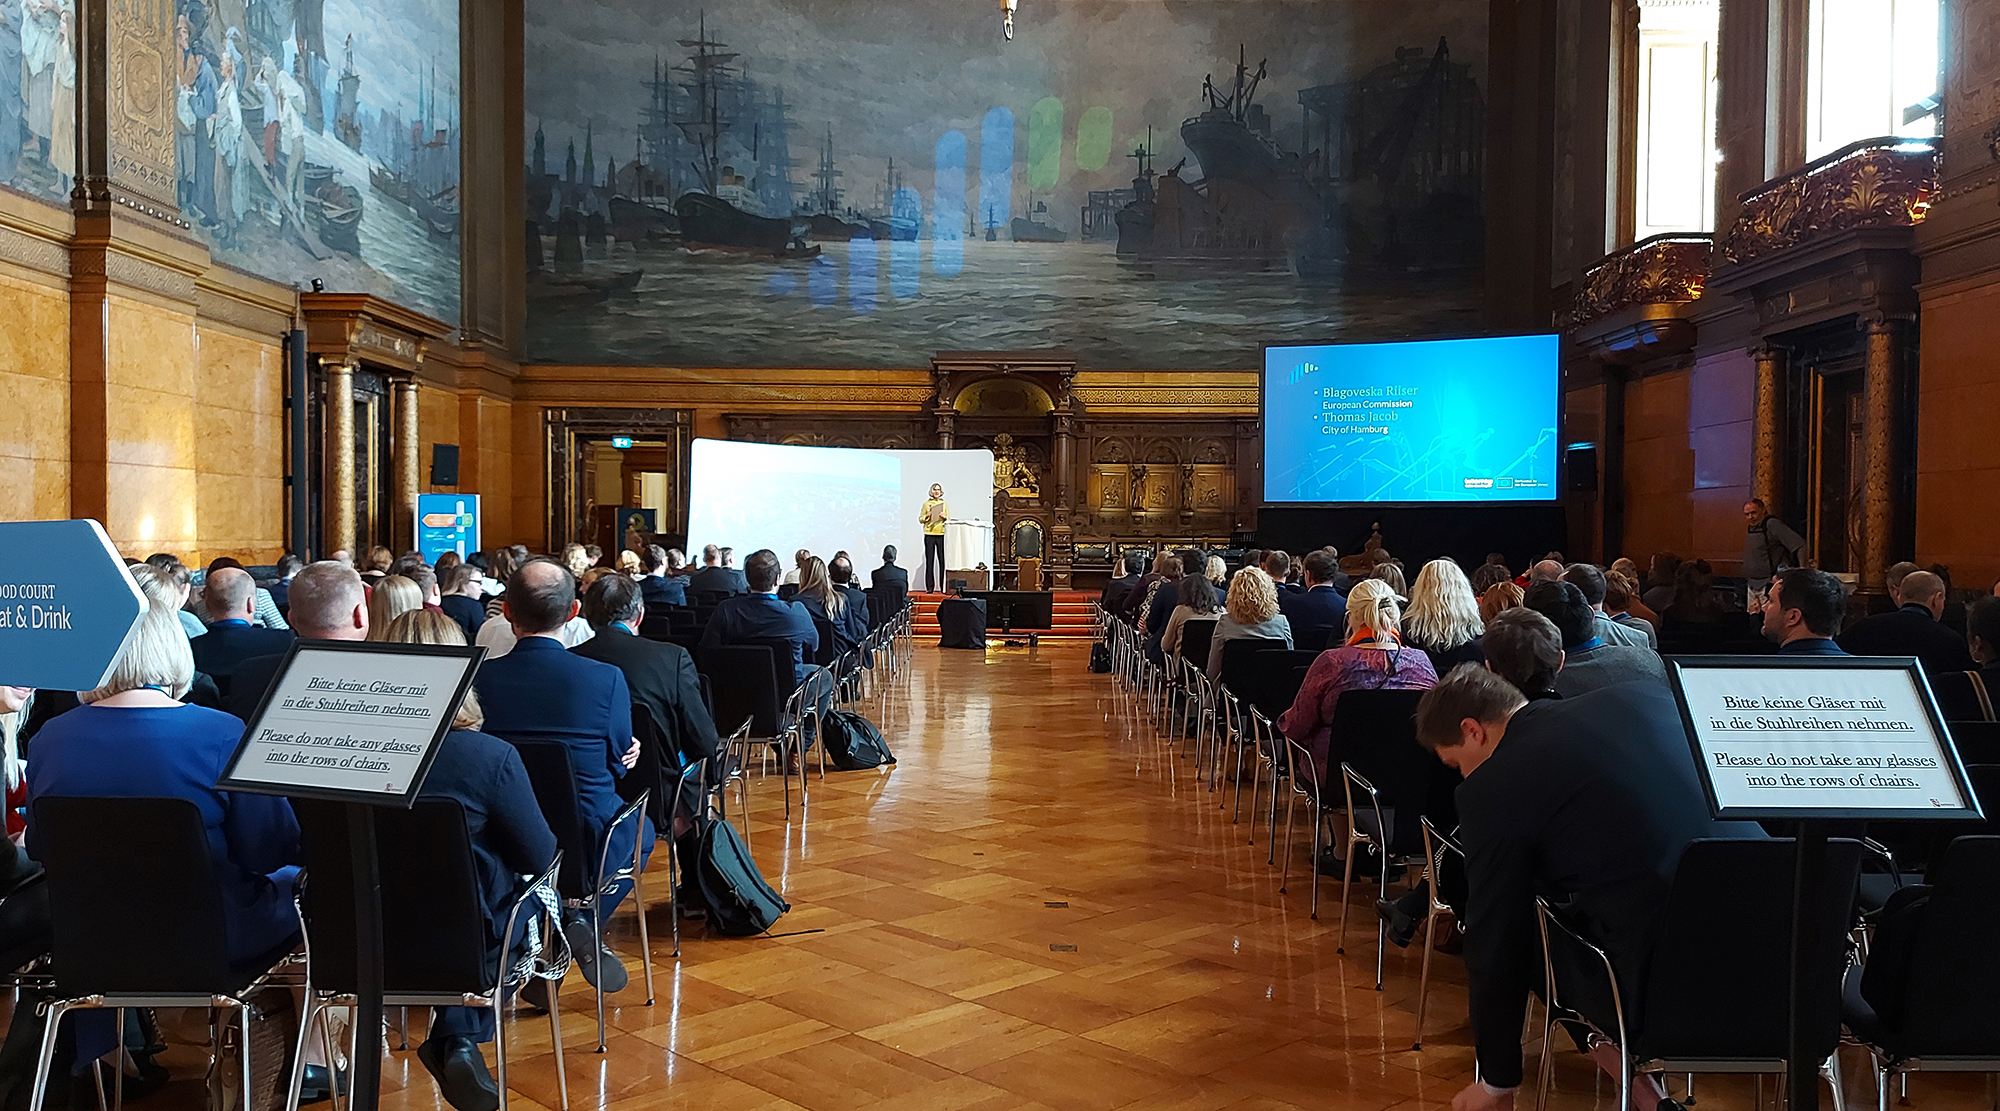 Hall of the Interreg conference in Hamburg